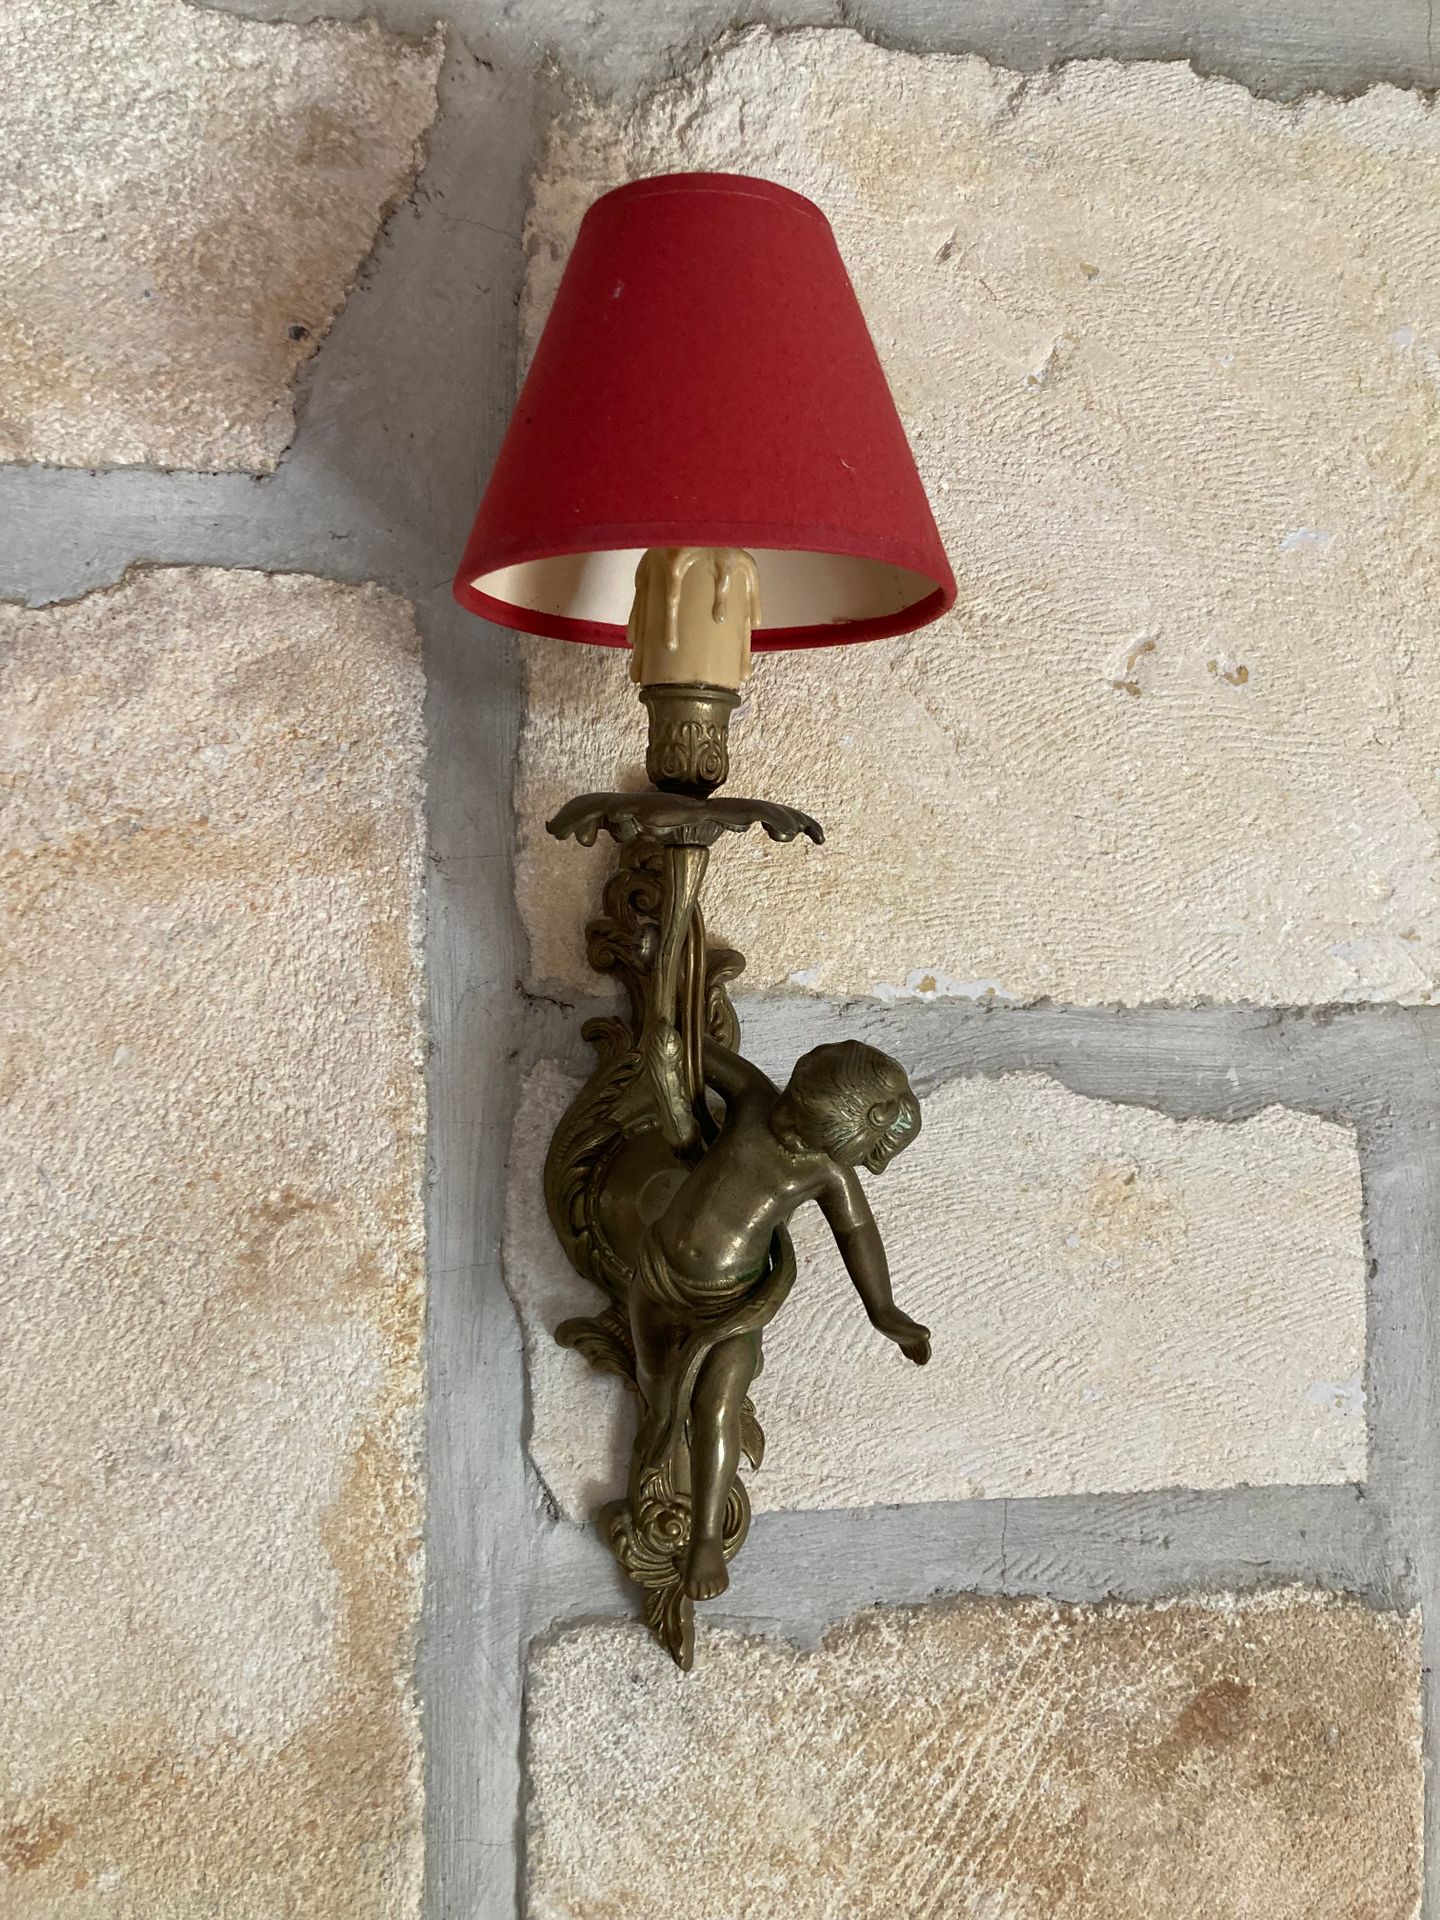 Null 一对黄铜壁炉，装饰有小天使，手持一盏以爬山虎为主题的灯
H.25厘米